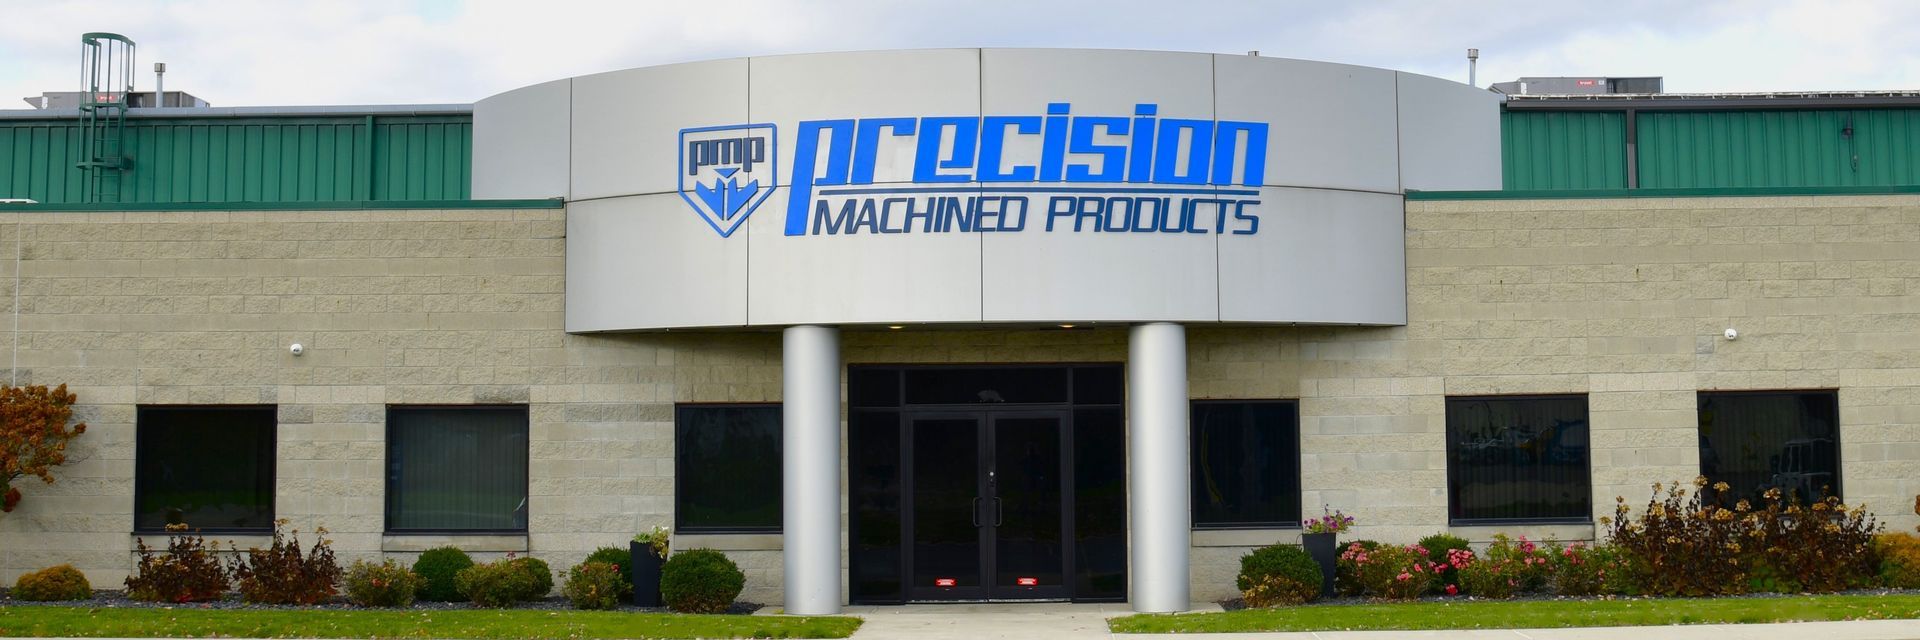 Romulus Detroit aerospace automotive precision 5 axis tooling manufacturing